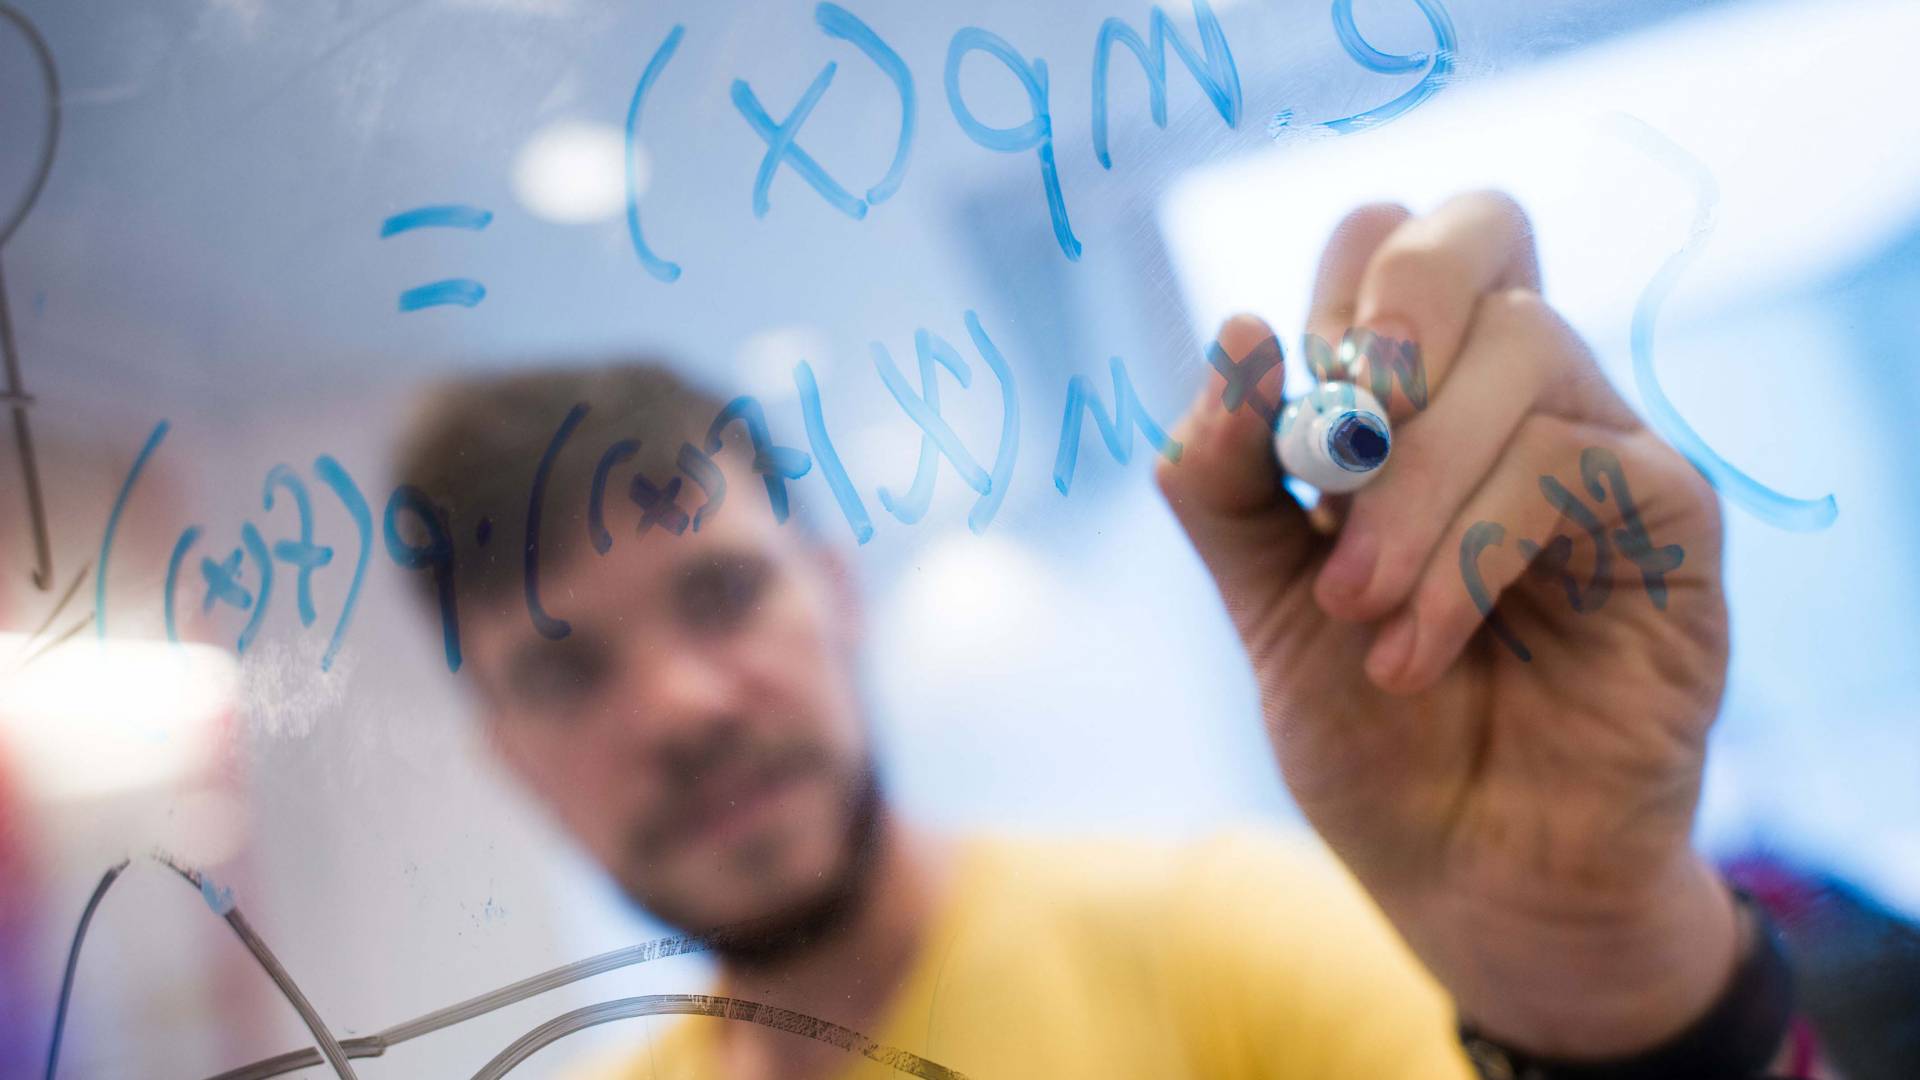 A student writes math formulas on a plexiglas surface